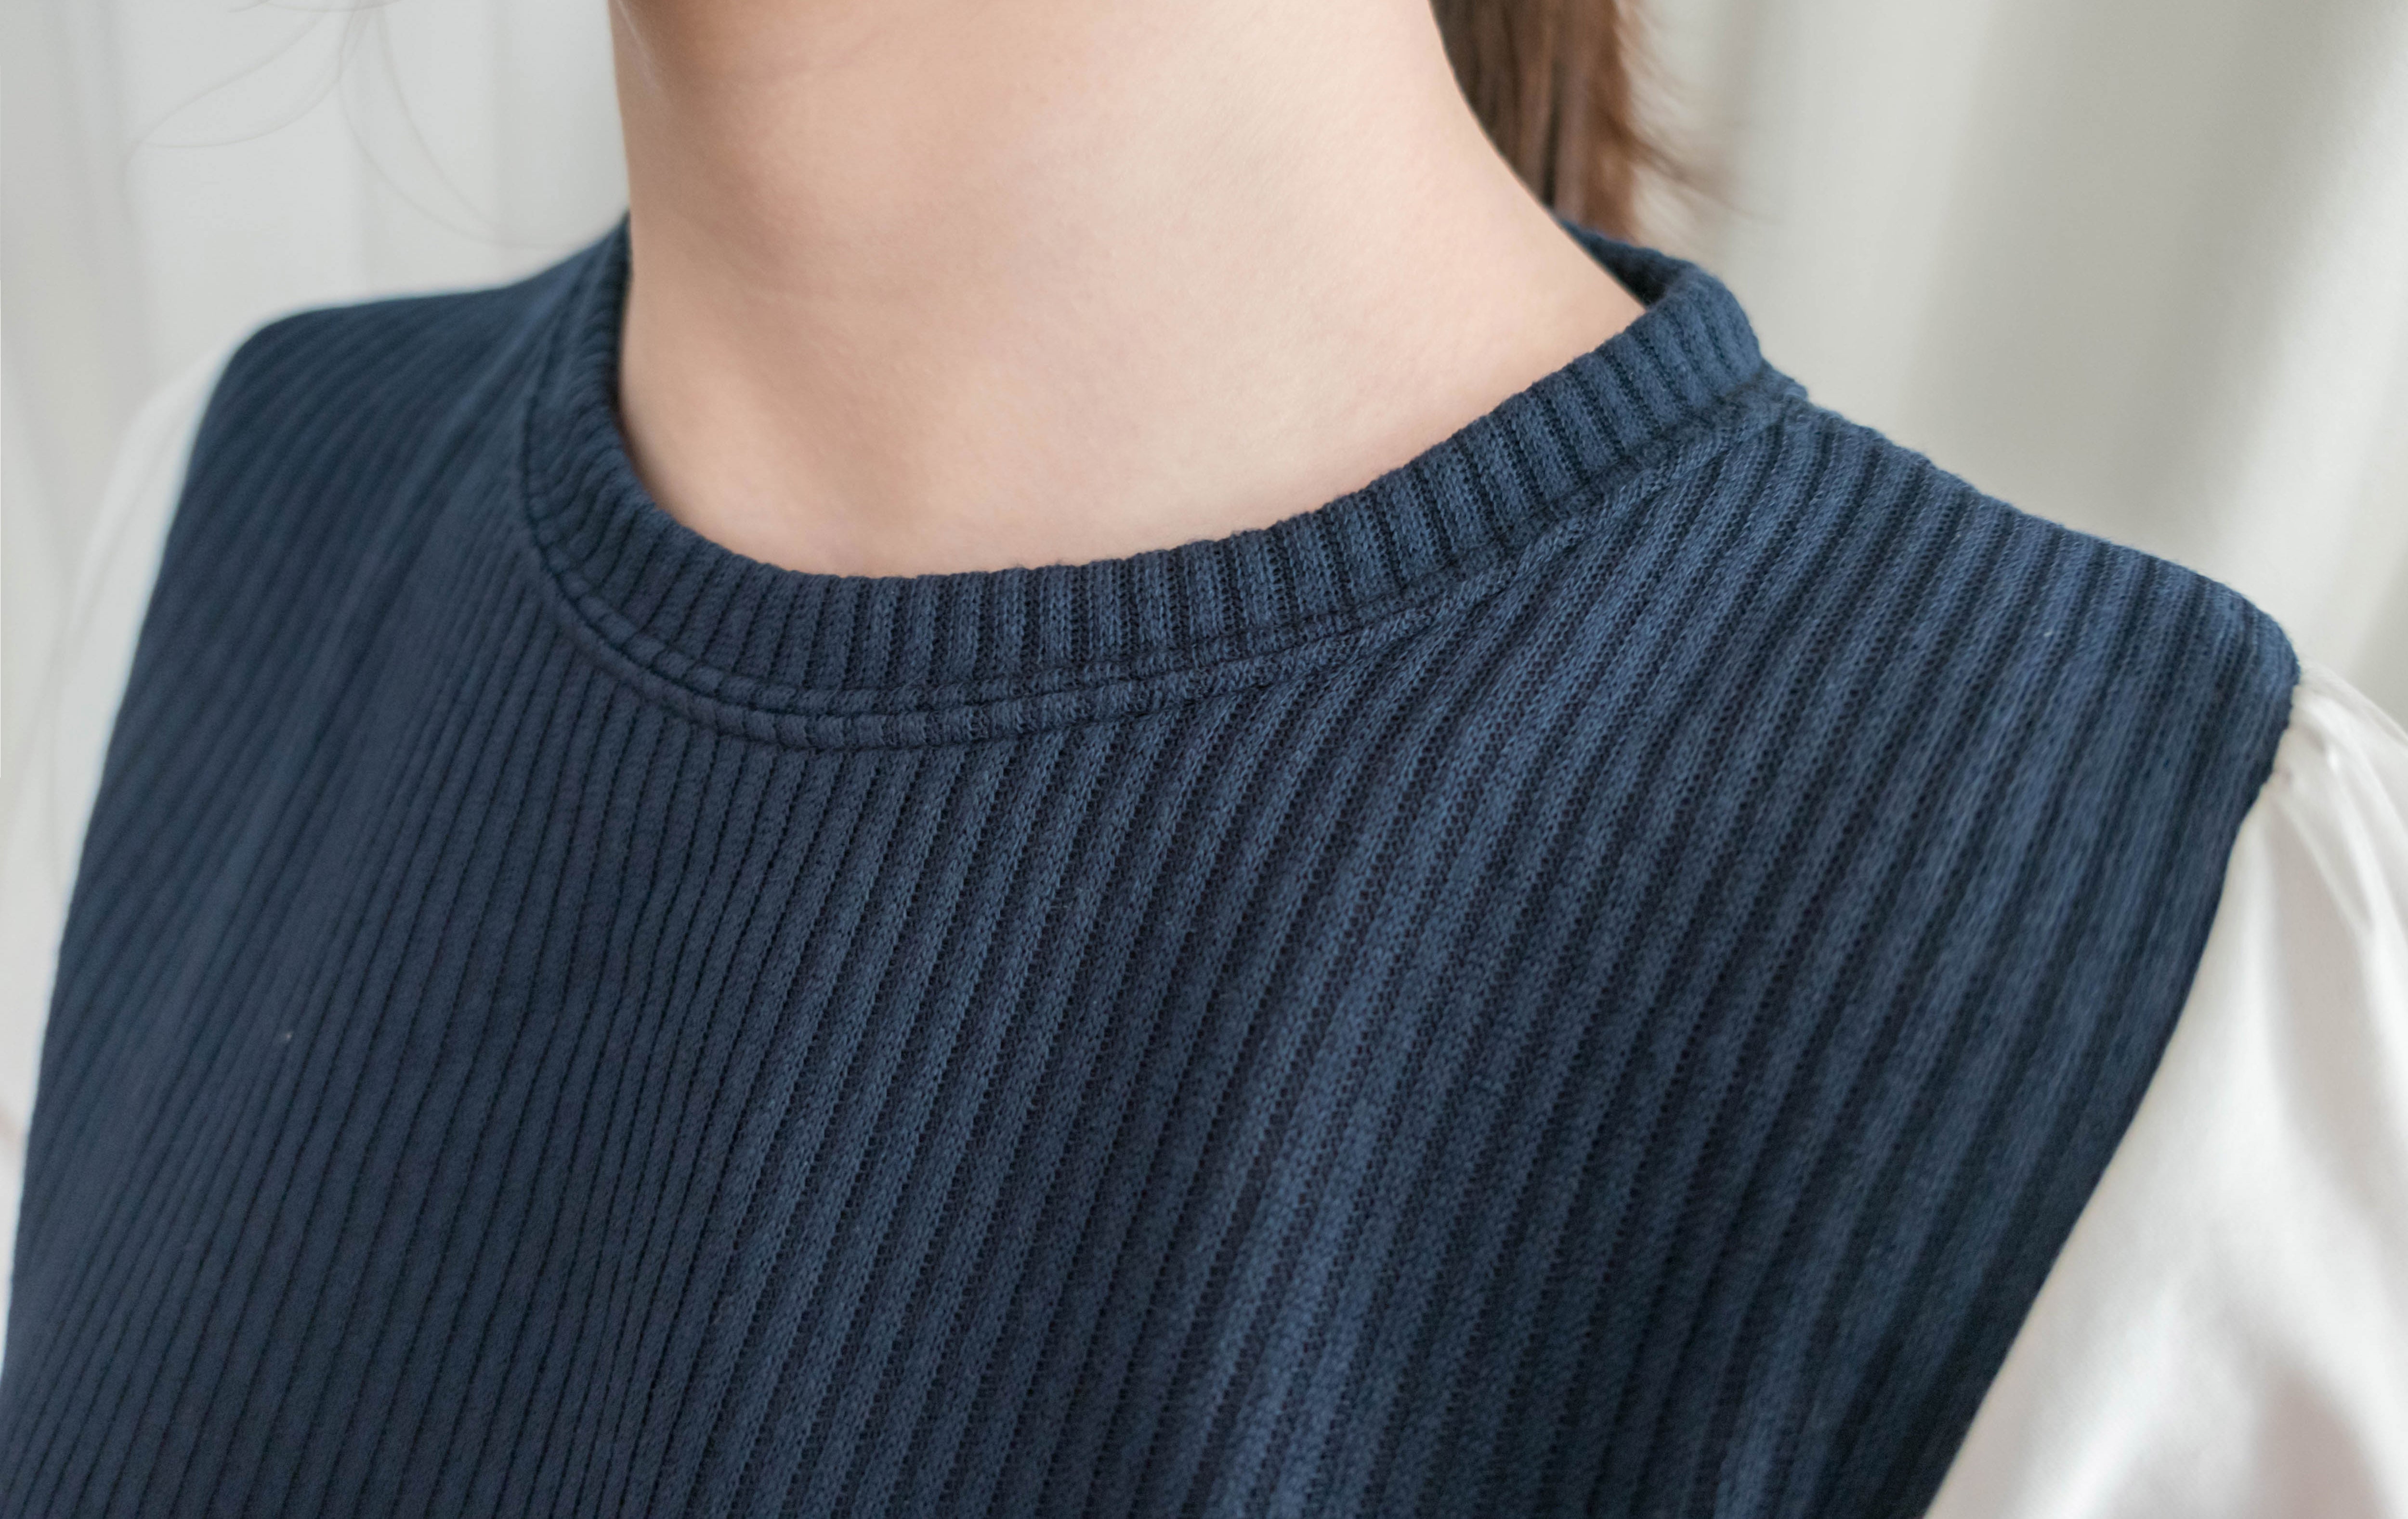 Knit Shirt 知性假兩件恤衫加彈性針織背心連身裙, Dress/ DS9326